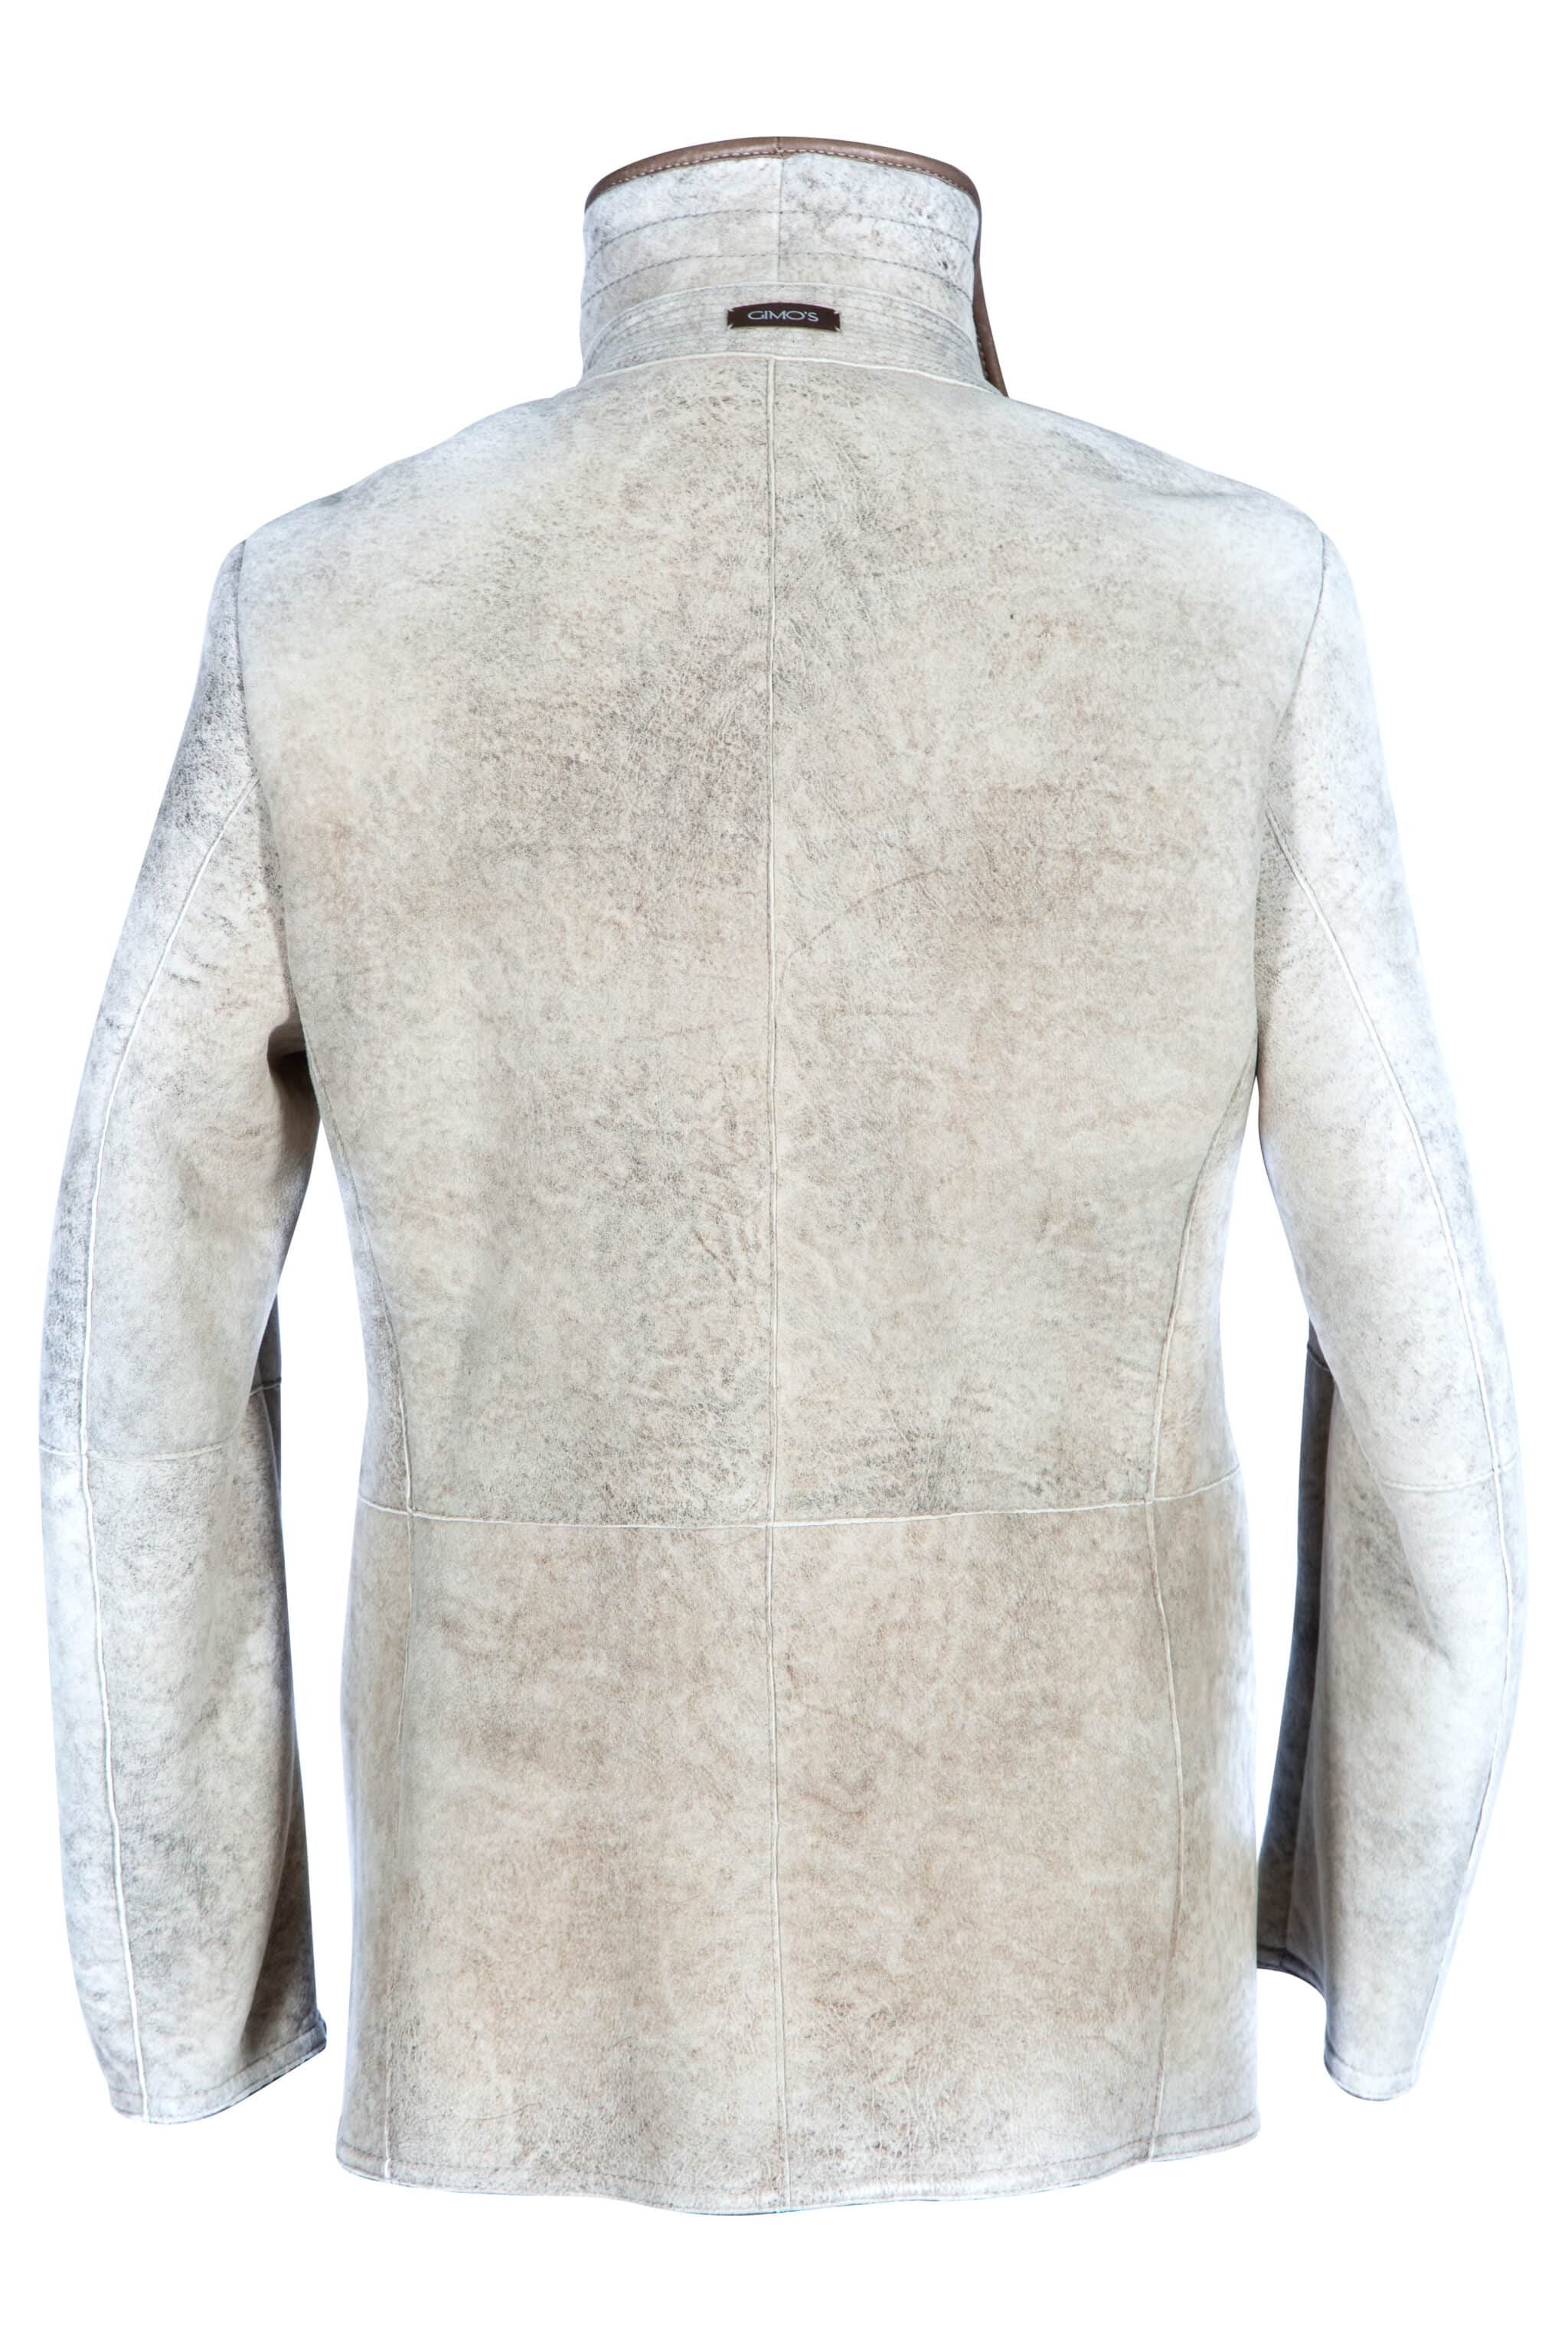 Back view of hand tanned ultralight italian made Merino shearling jacket